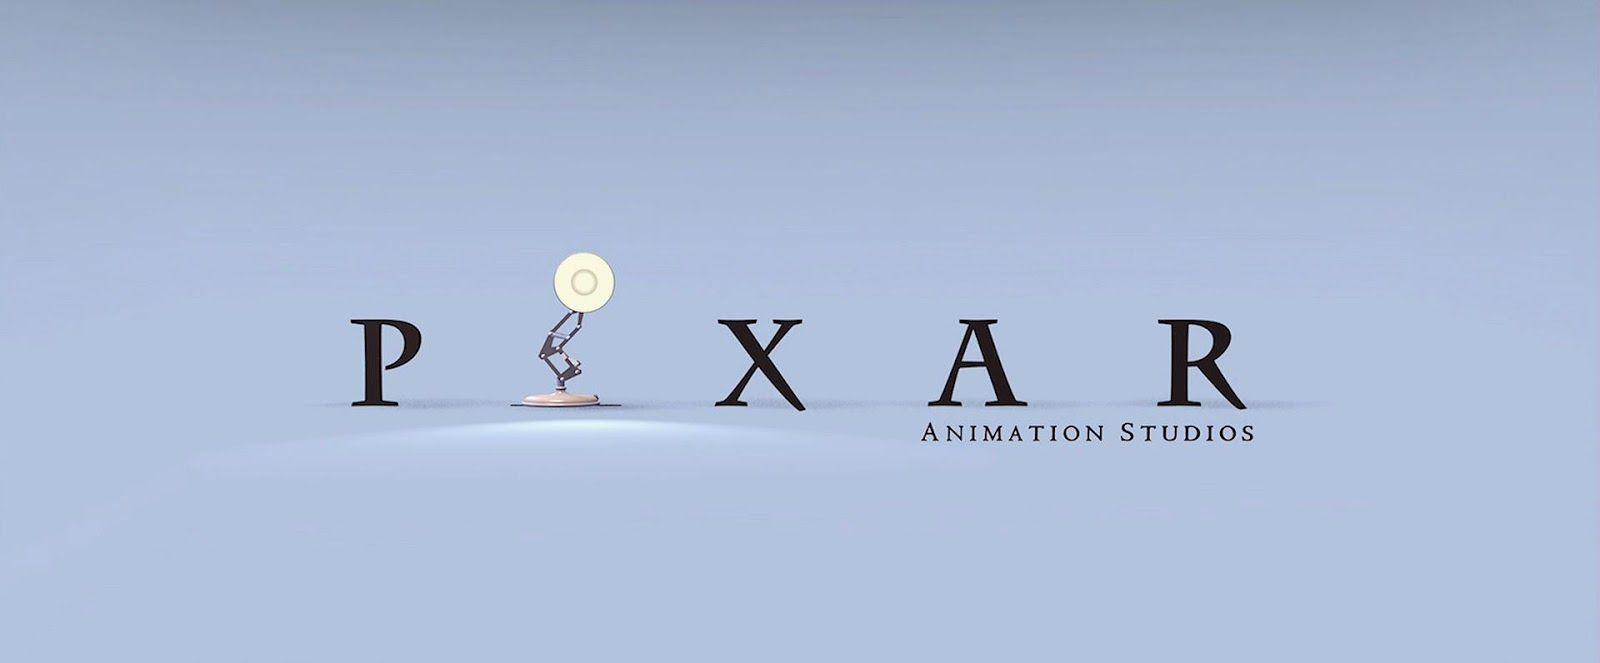 Disney Pixar Animation Studios Logo - Pixar #AnimationStudios #Lamp #Logo Disney•Pixar #Animation #Studios ...